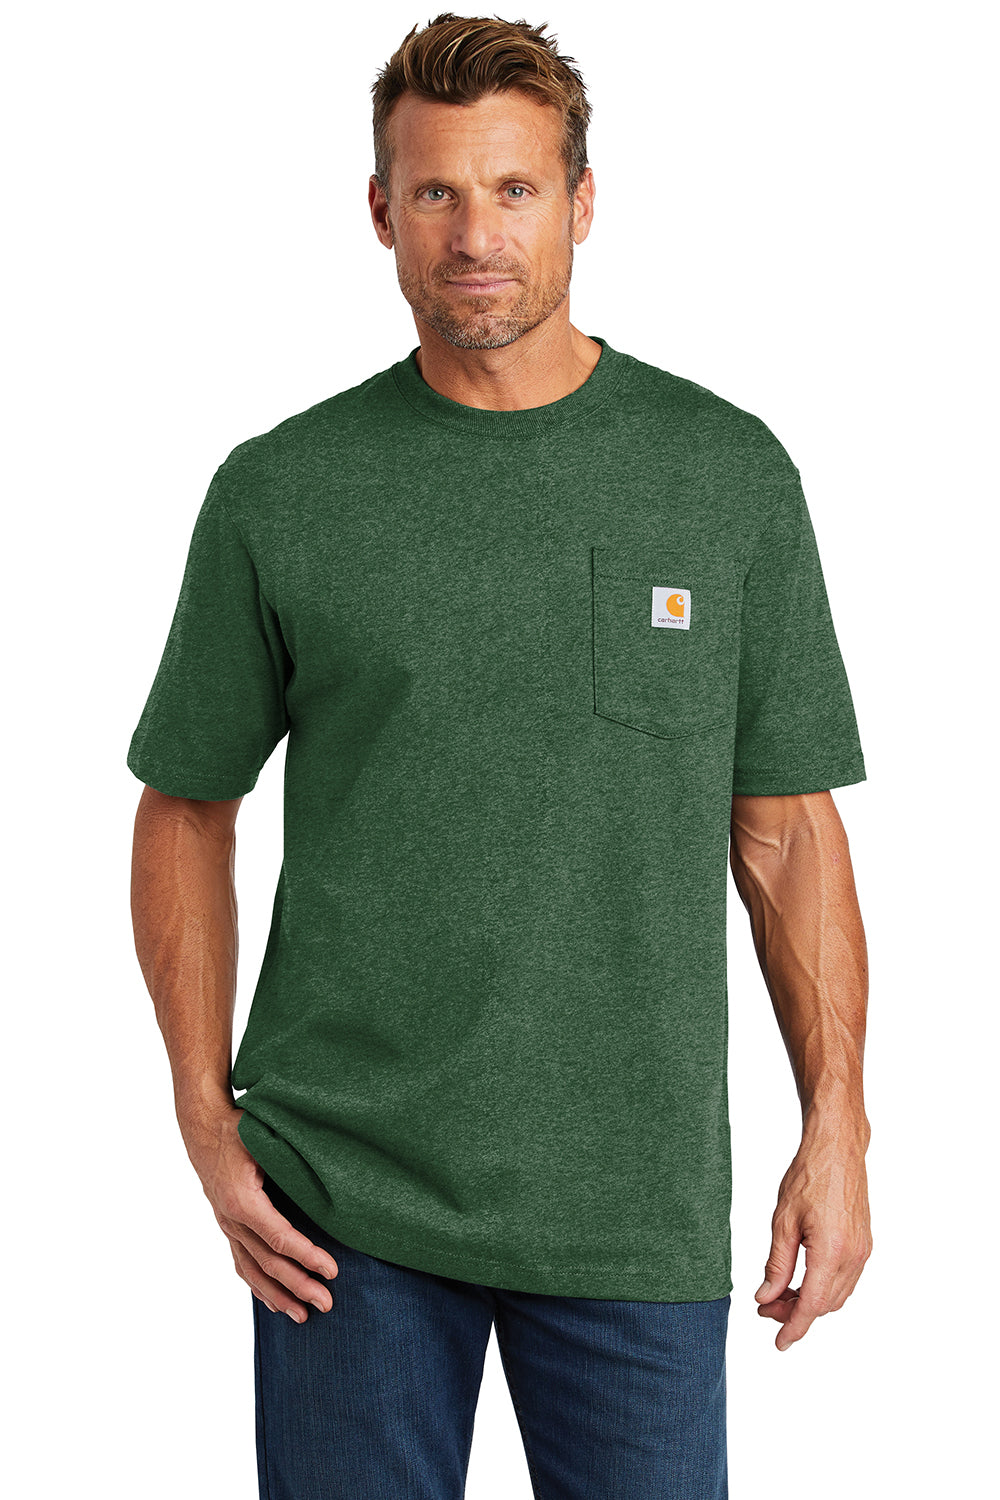 Carhartt CTK87/CTTK87 Mens Workwear Short Sleeve Crewneck T-Shirt w/ Pocket Heather North Woods Green Model Front